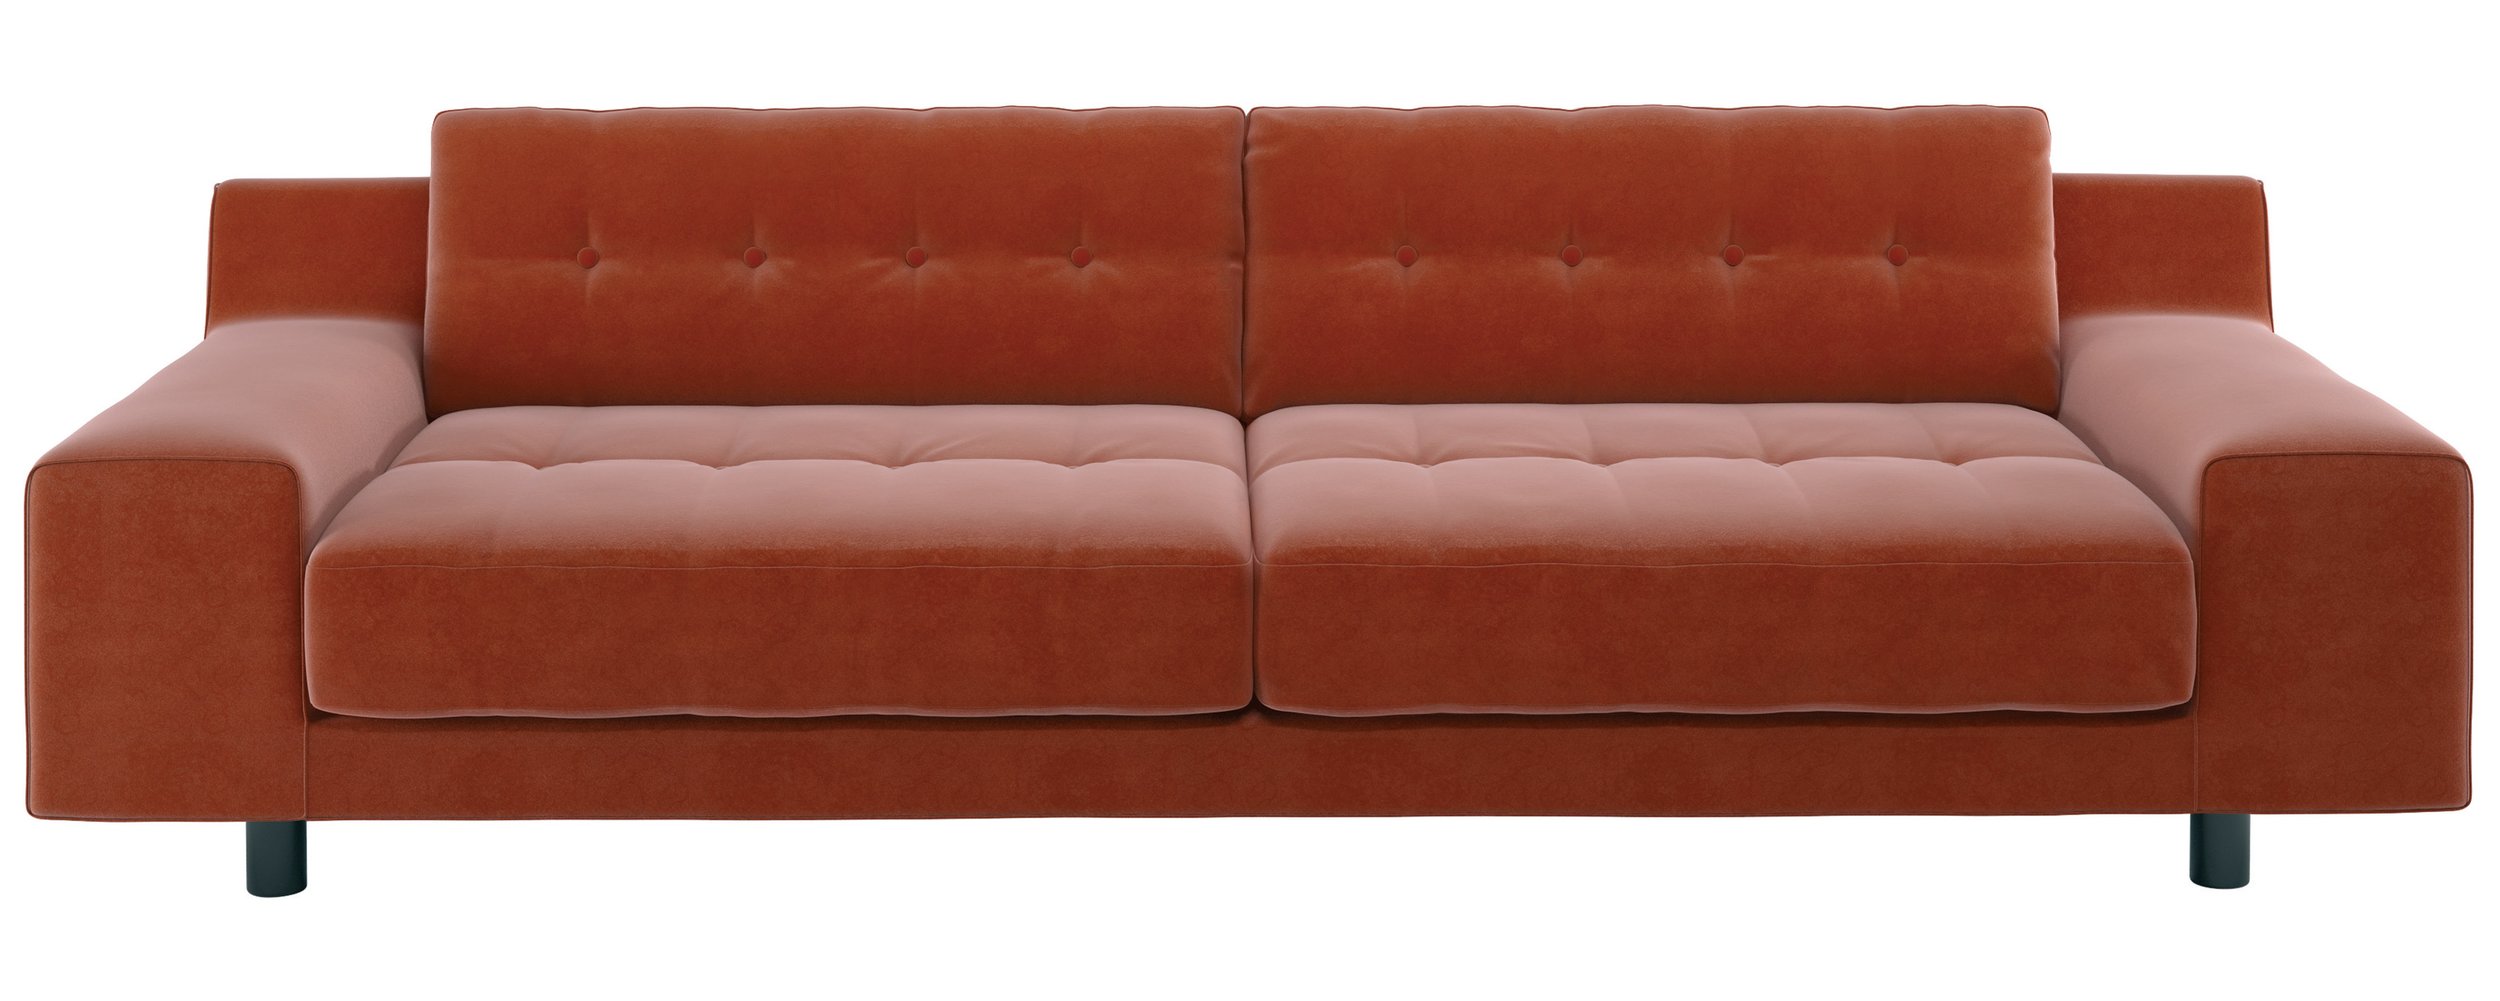 Hendricks 3 seater sofa.jpg